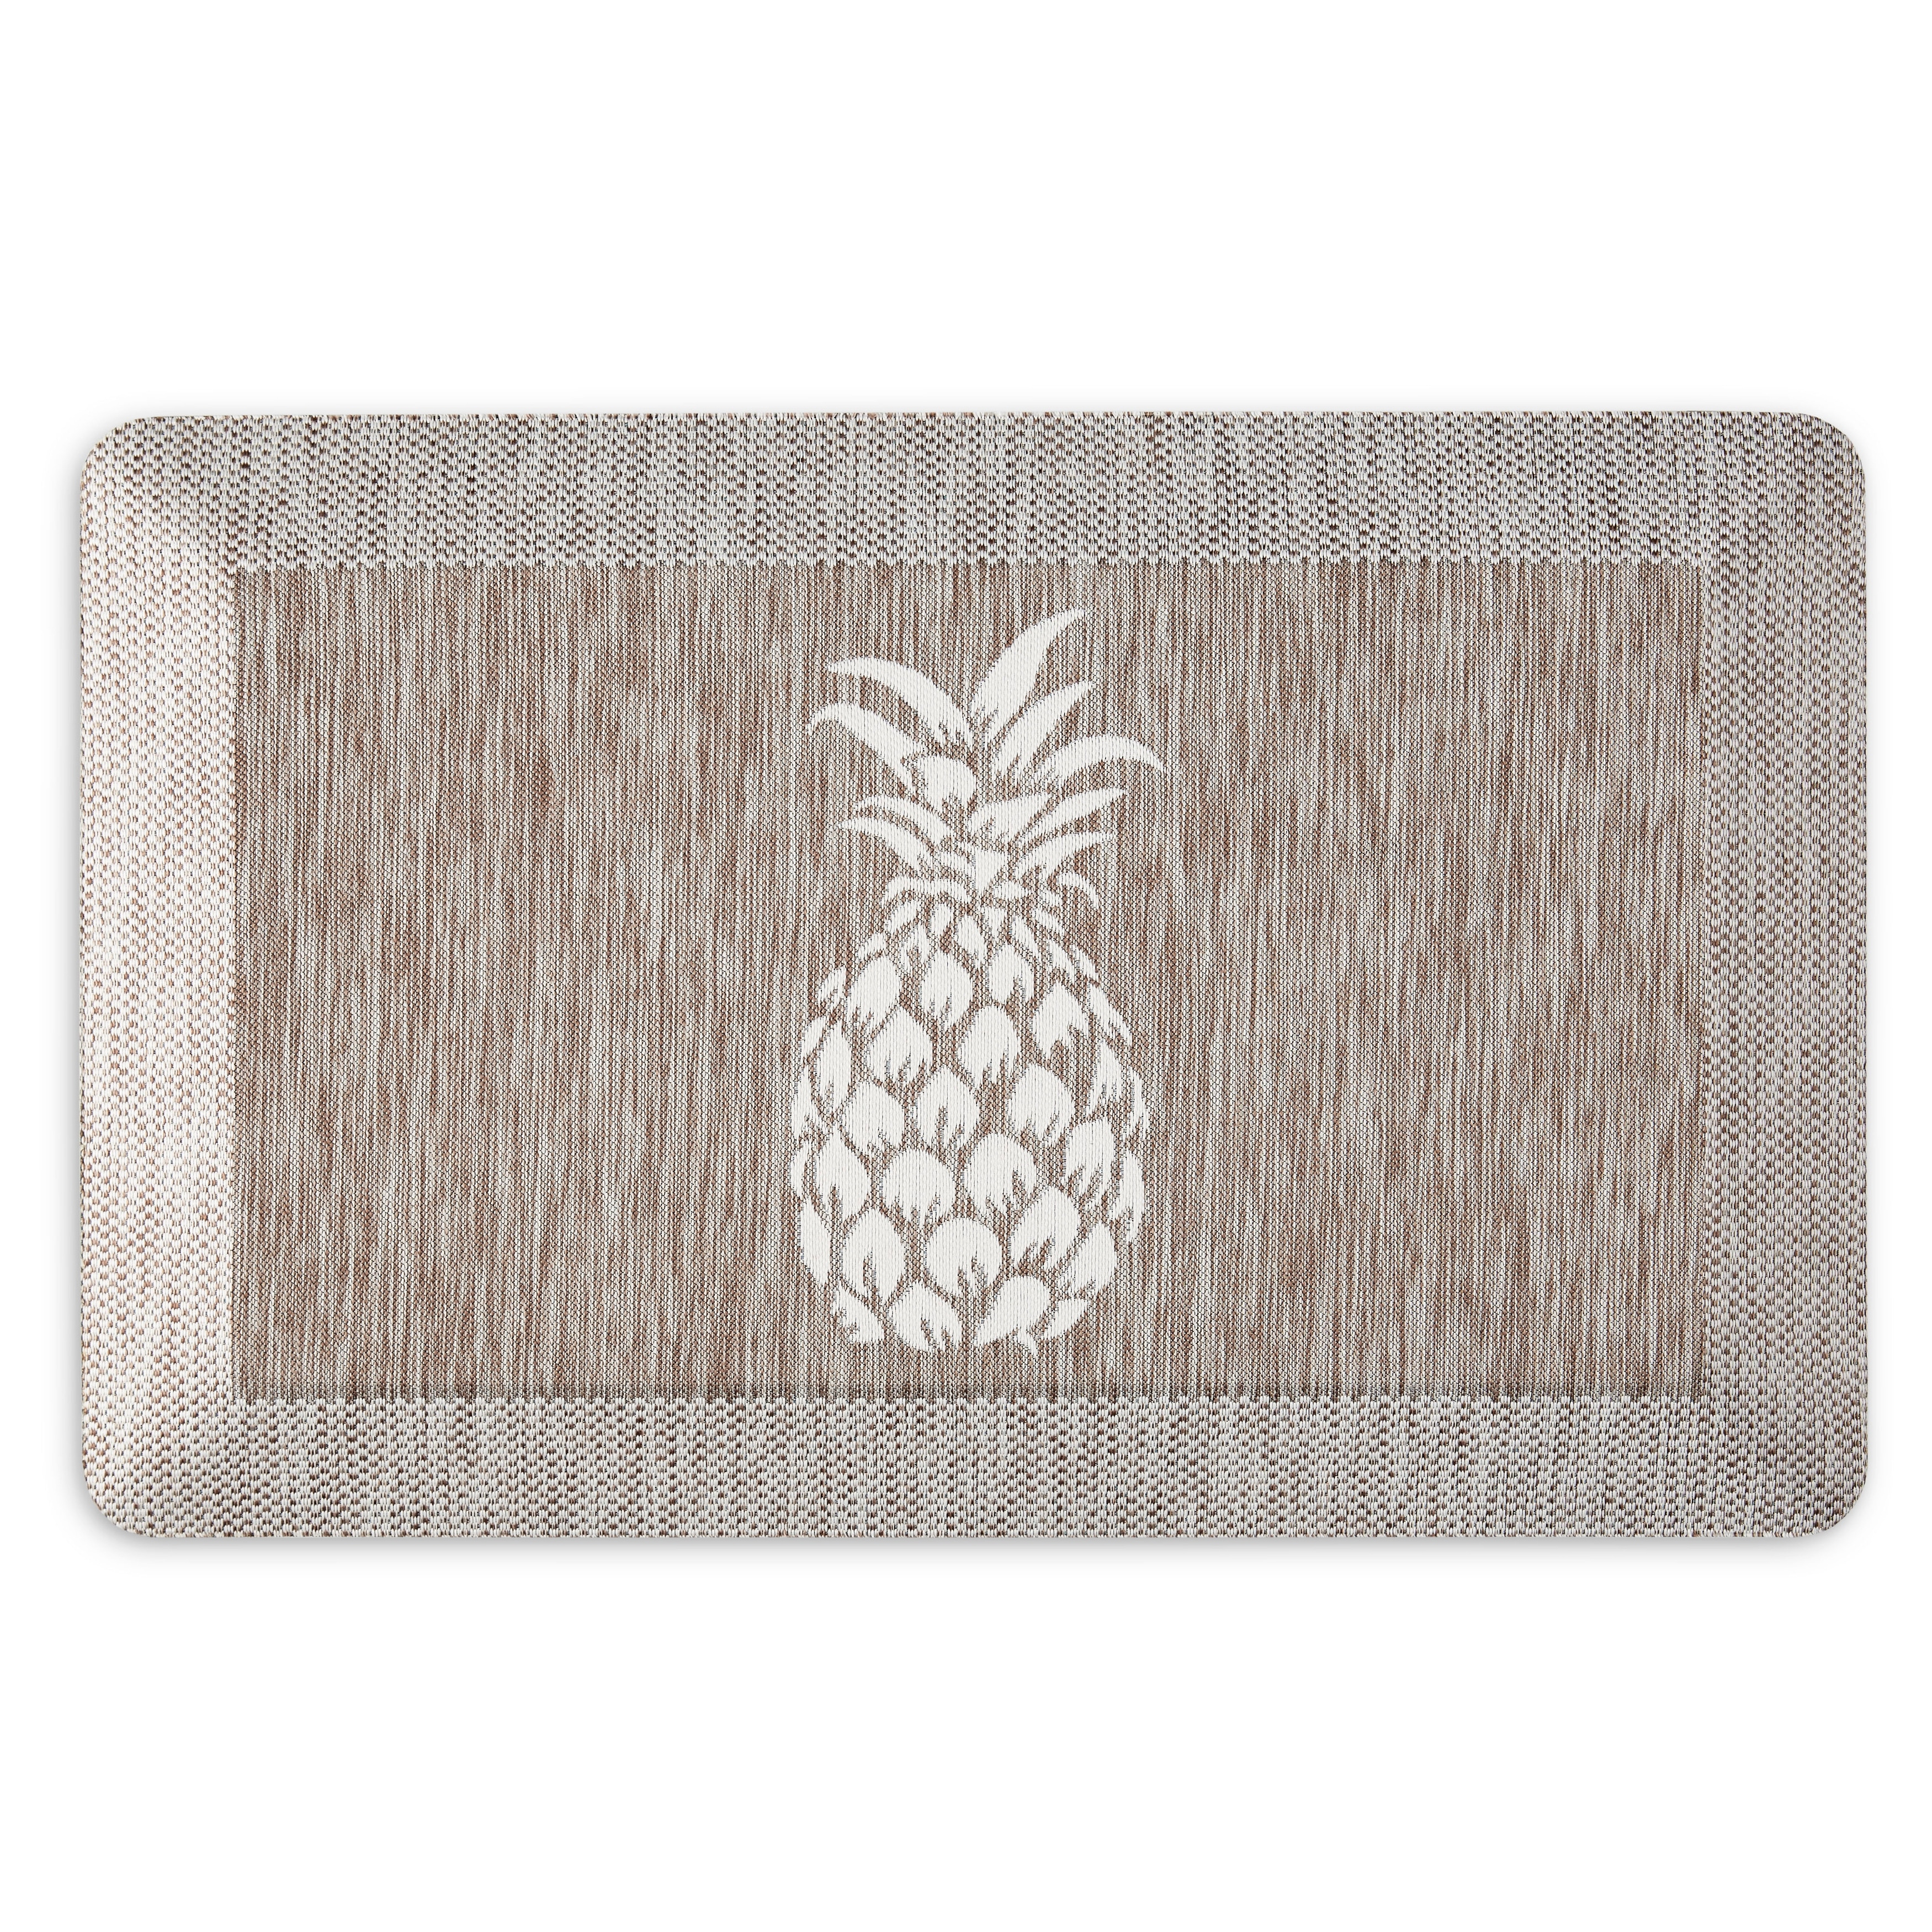 Avera Products | Classic Pineapple Welcome Mat, Natural Coir Fiber Doormat, Anti